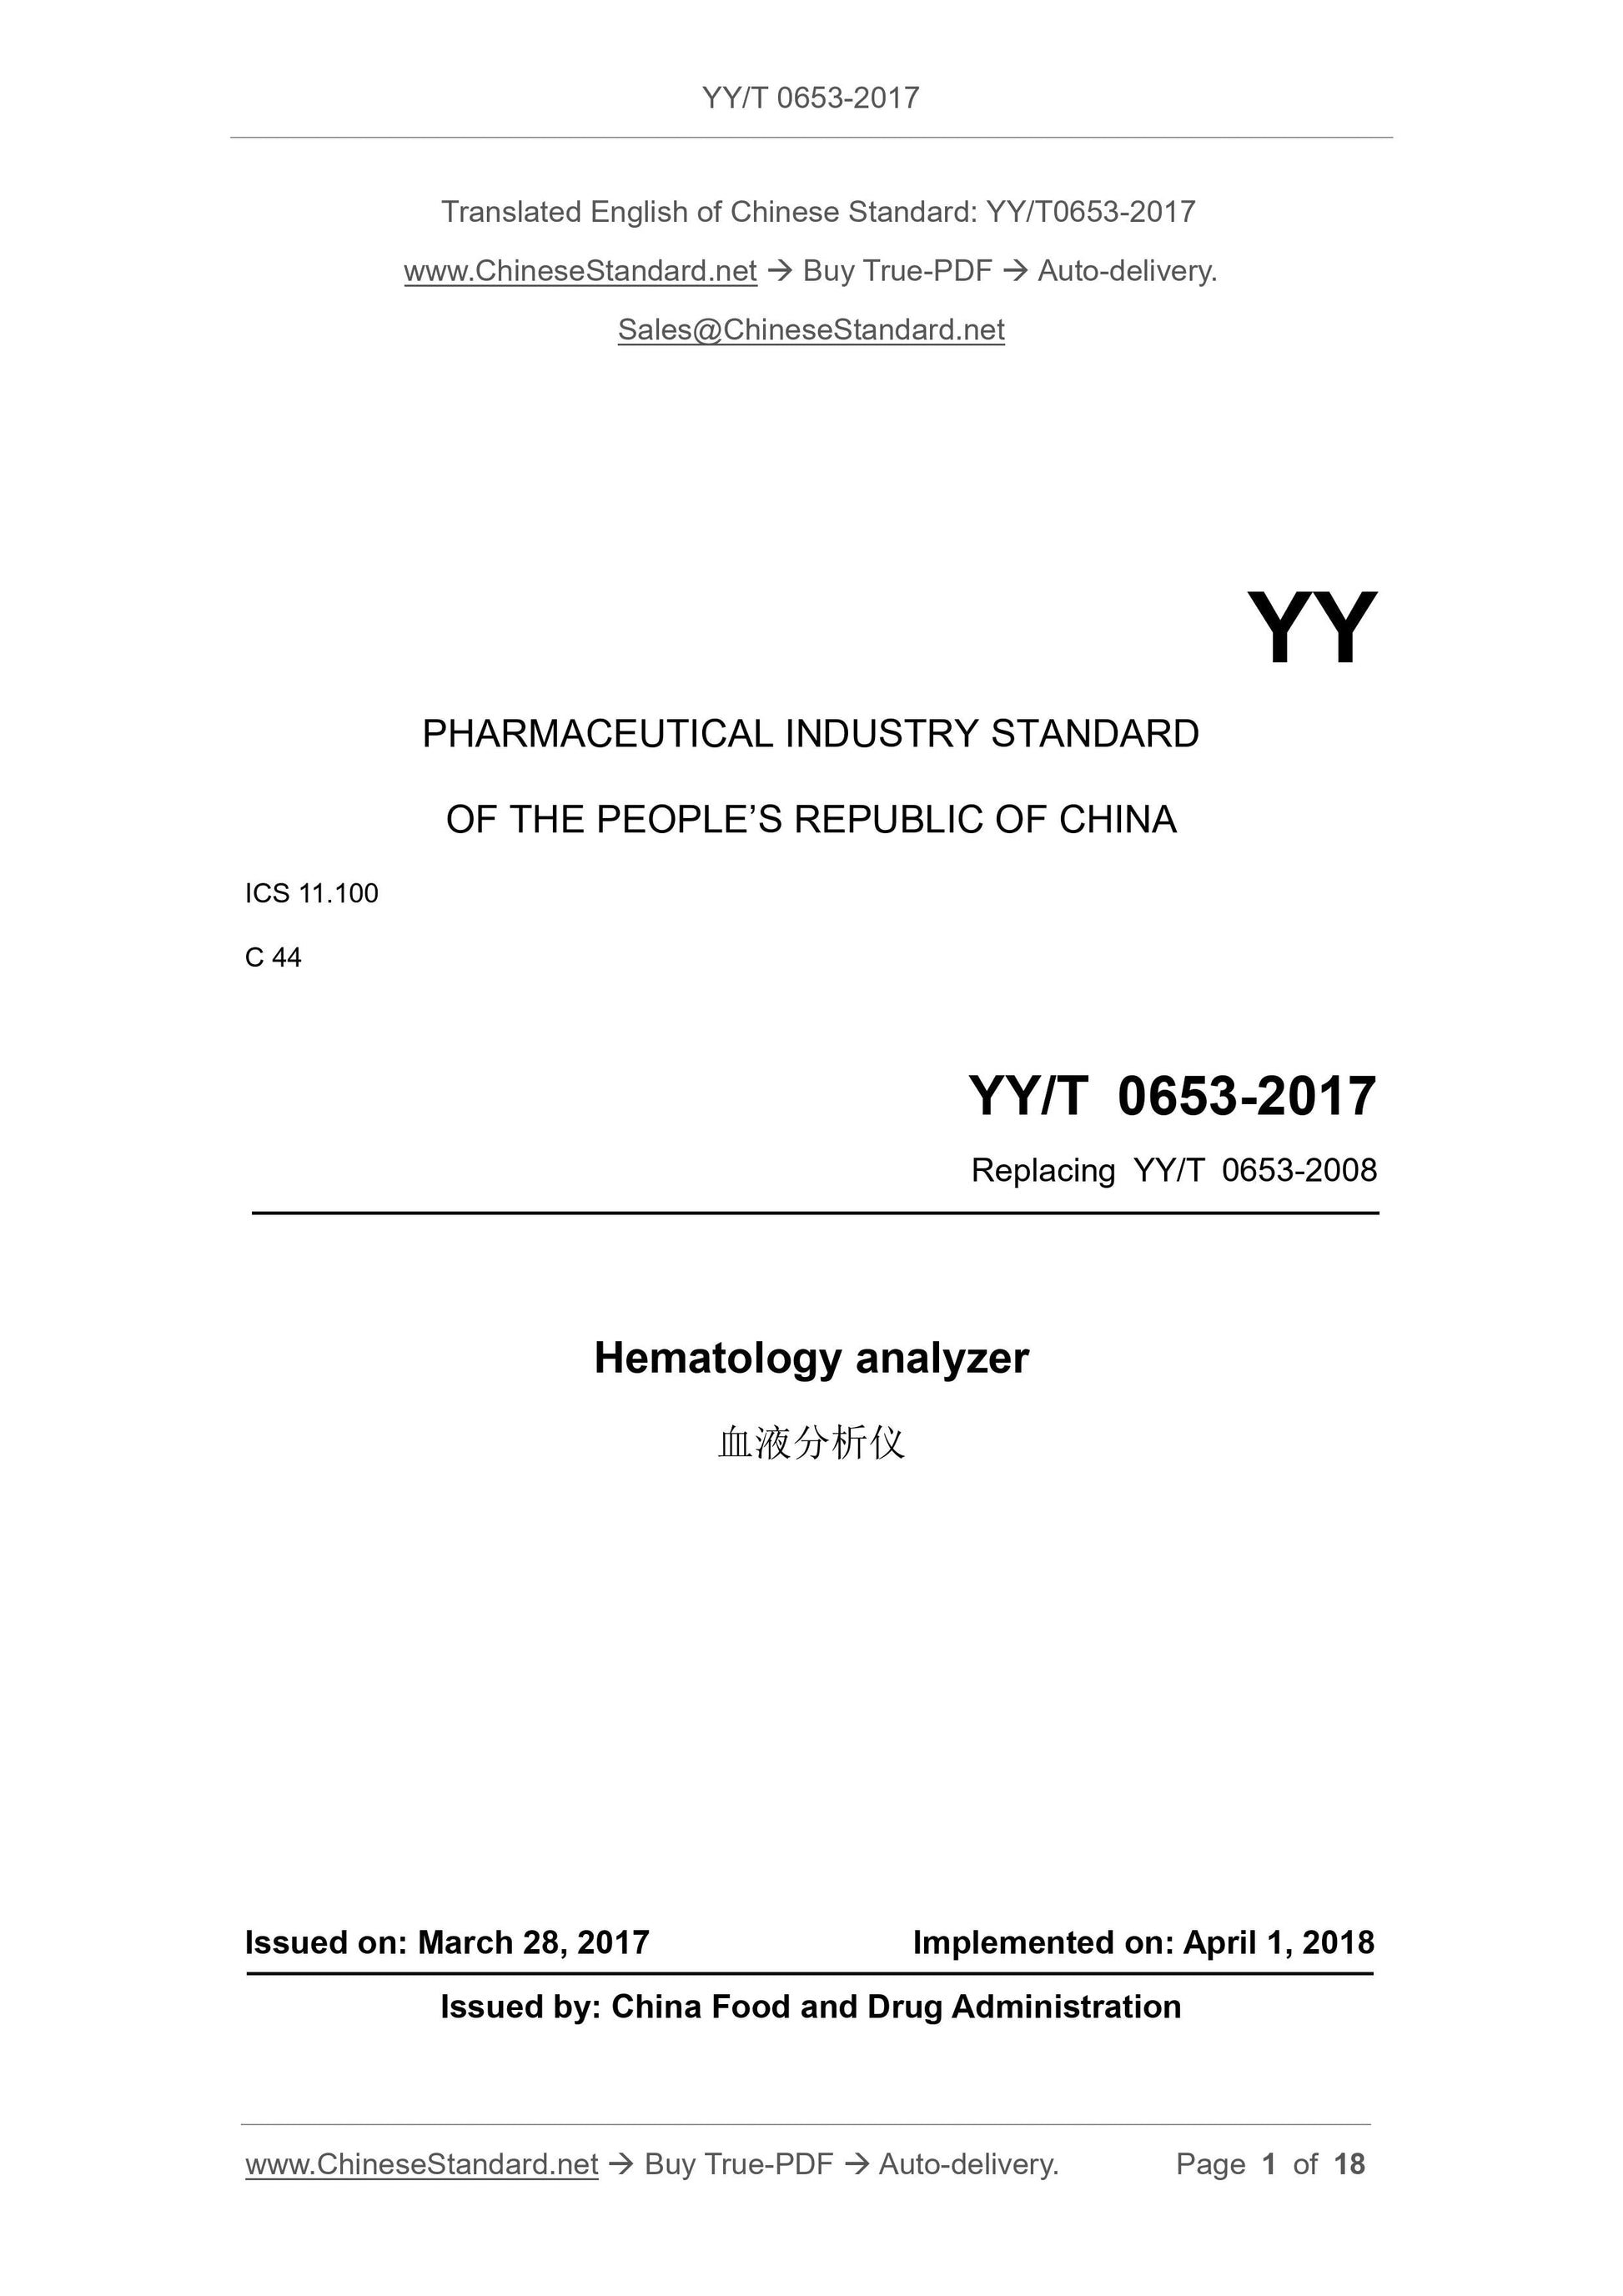 YY/T 0653-2017 Page 1